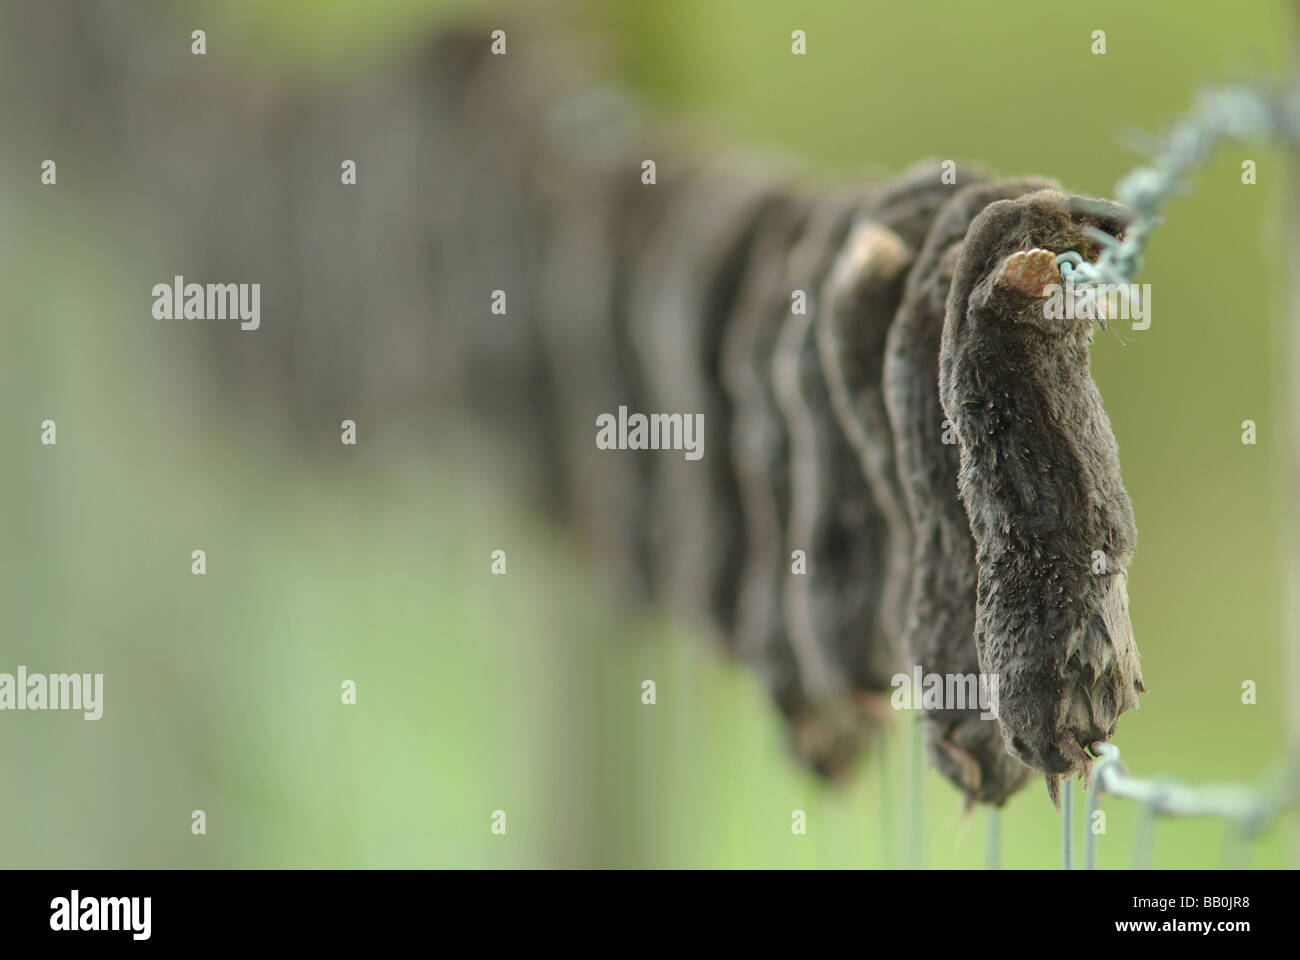 Dead moles (Talpa europaea) hung on a barbed wire fence. Stock Photo